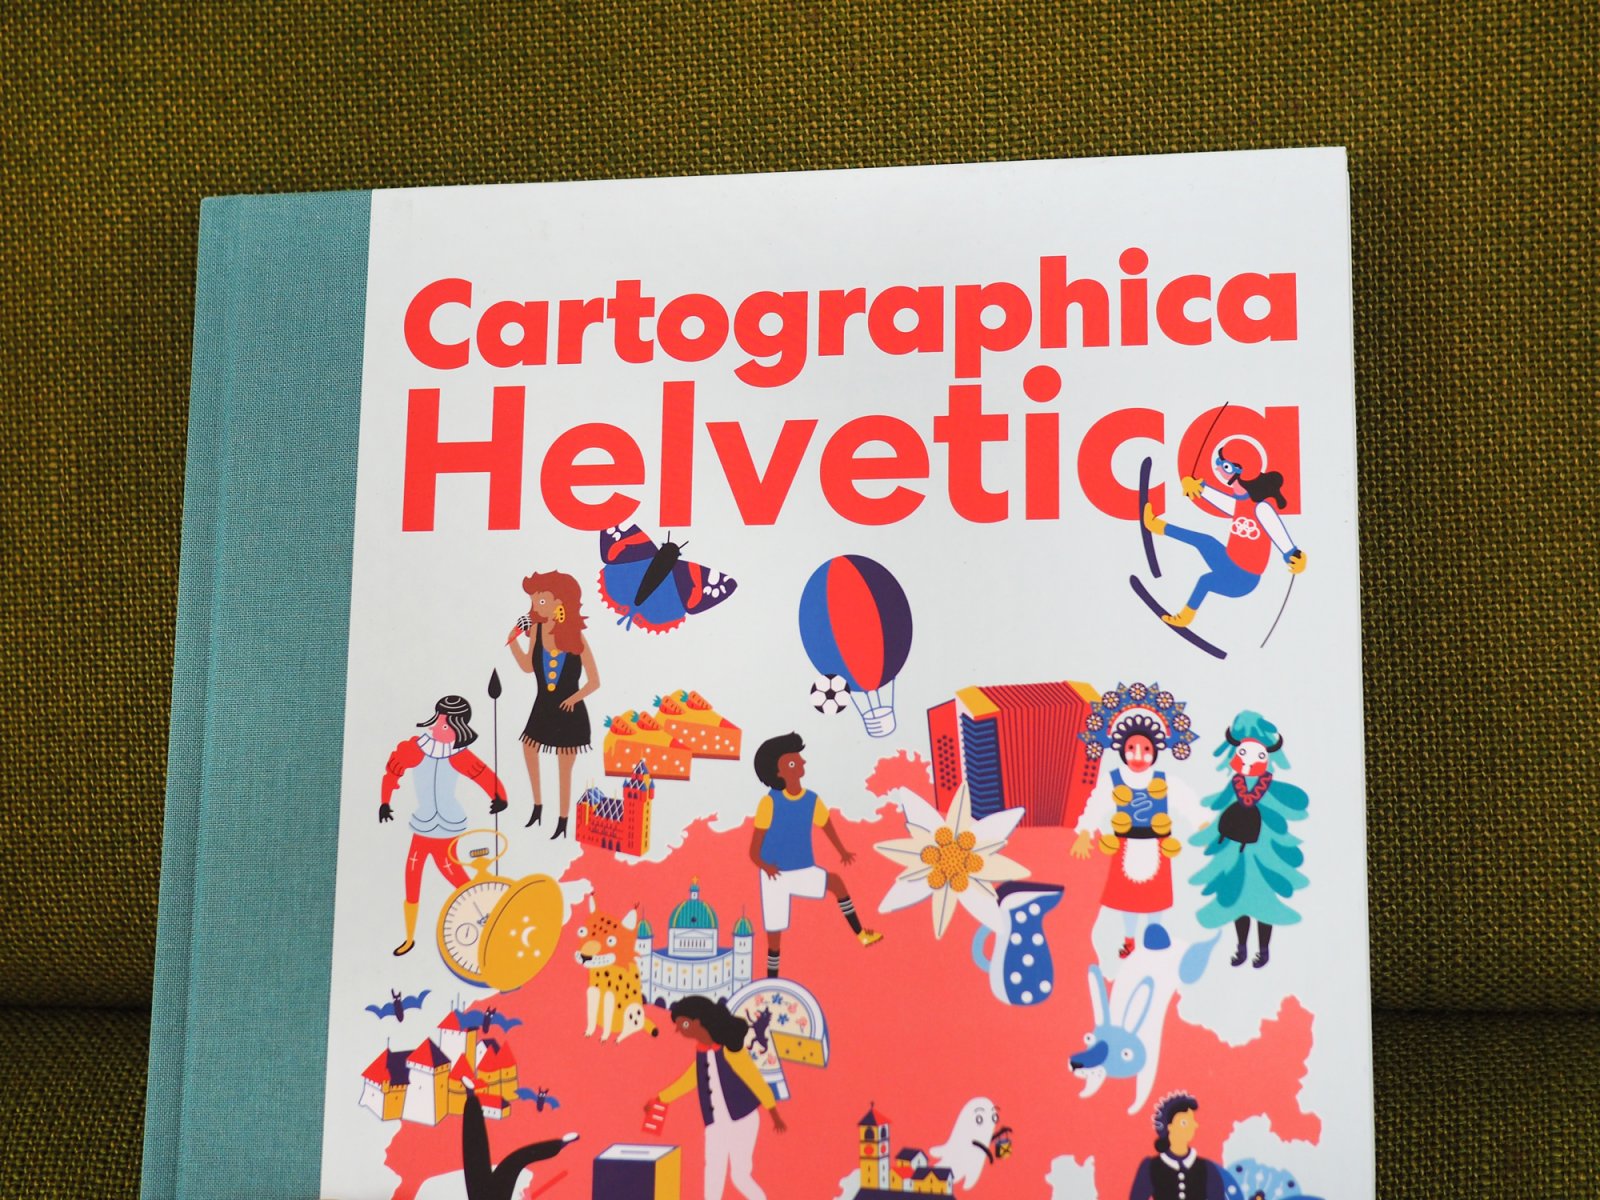 Cartographica Helvetica Explorer Atlas of Switzerland by Diccon Bewes